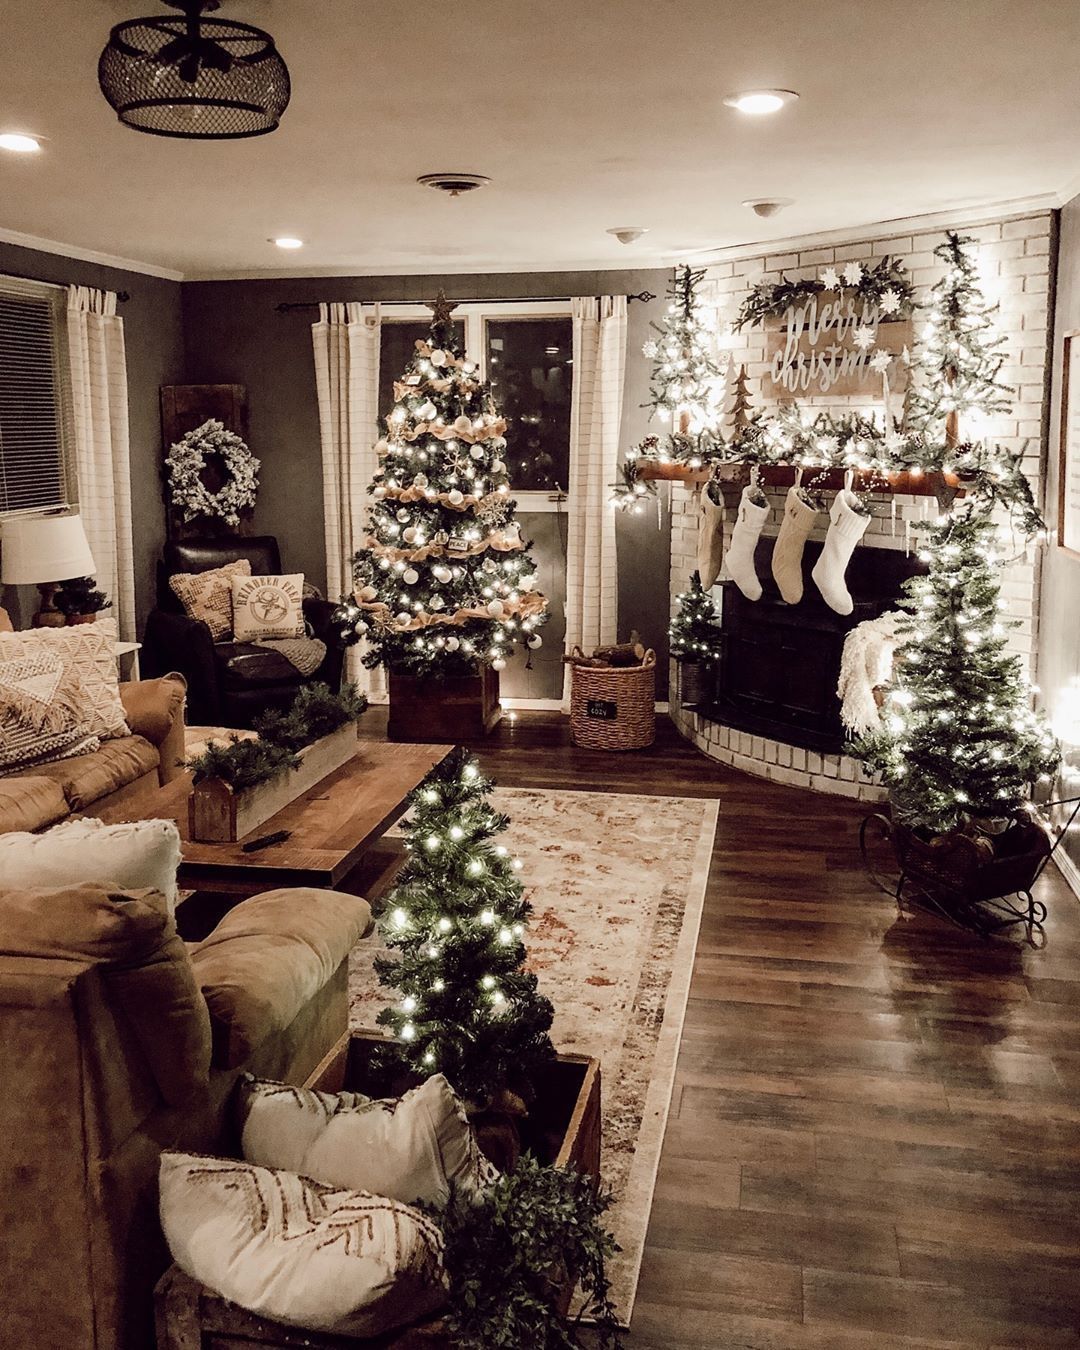 Indoor Christmas Decorations Ideas